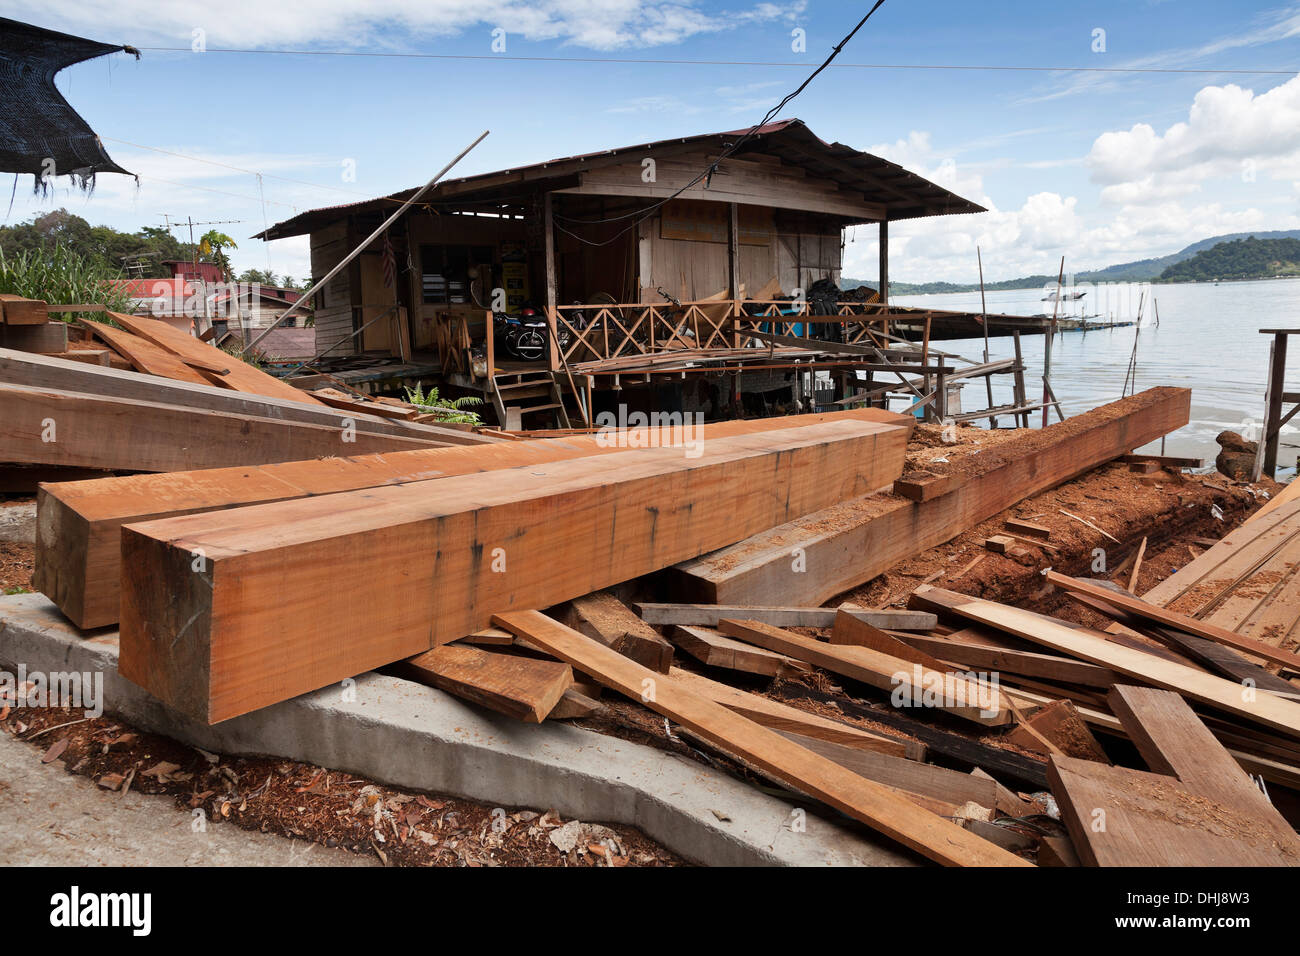 Hardwood planks & ribs cut for traditional boat building, Sungai Pinang Besar village, Pangkor island, Malaysia Stock Photo